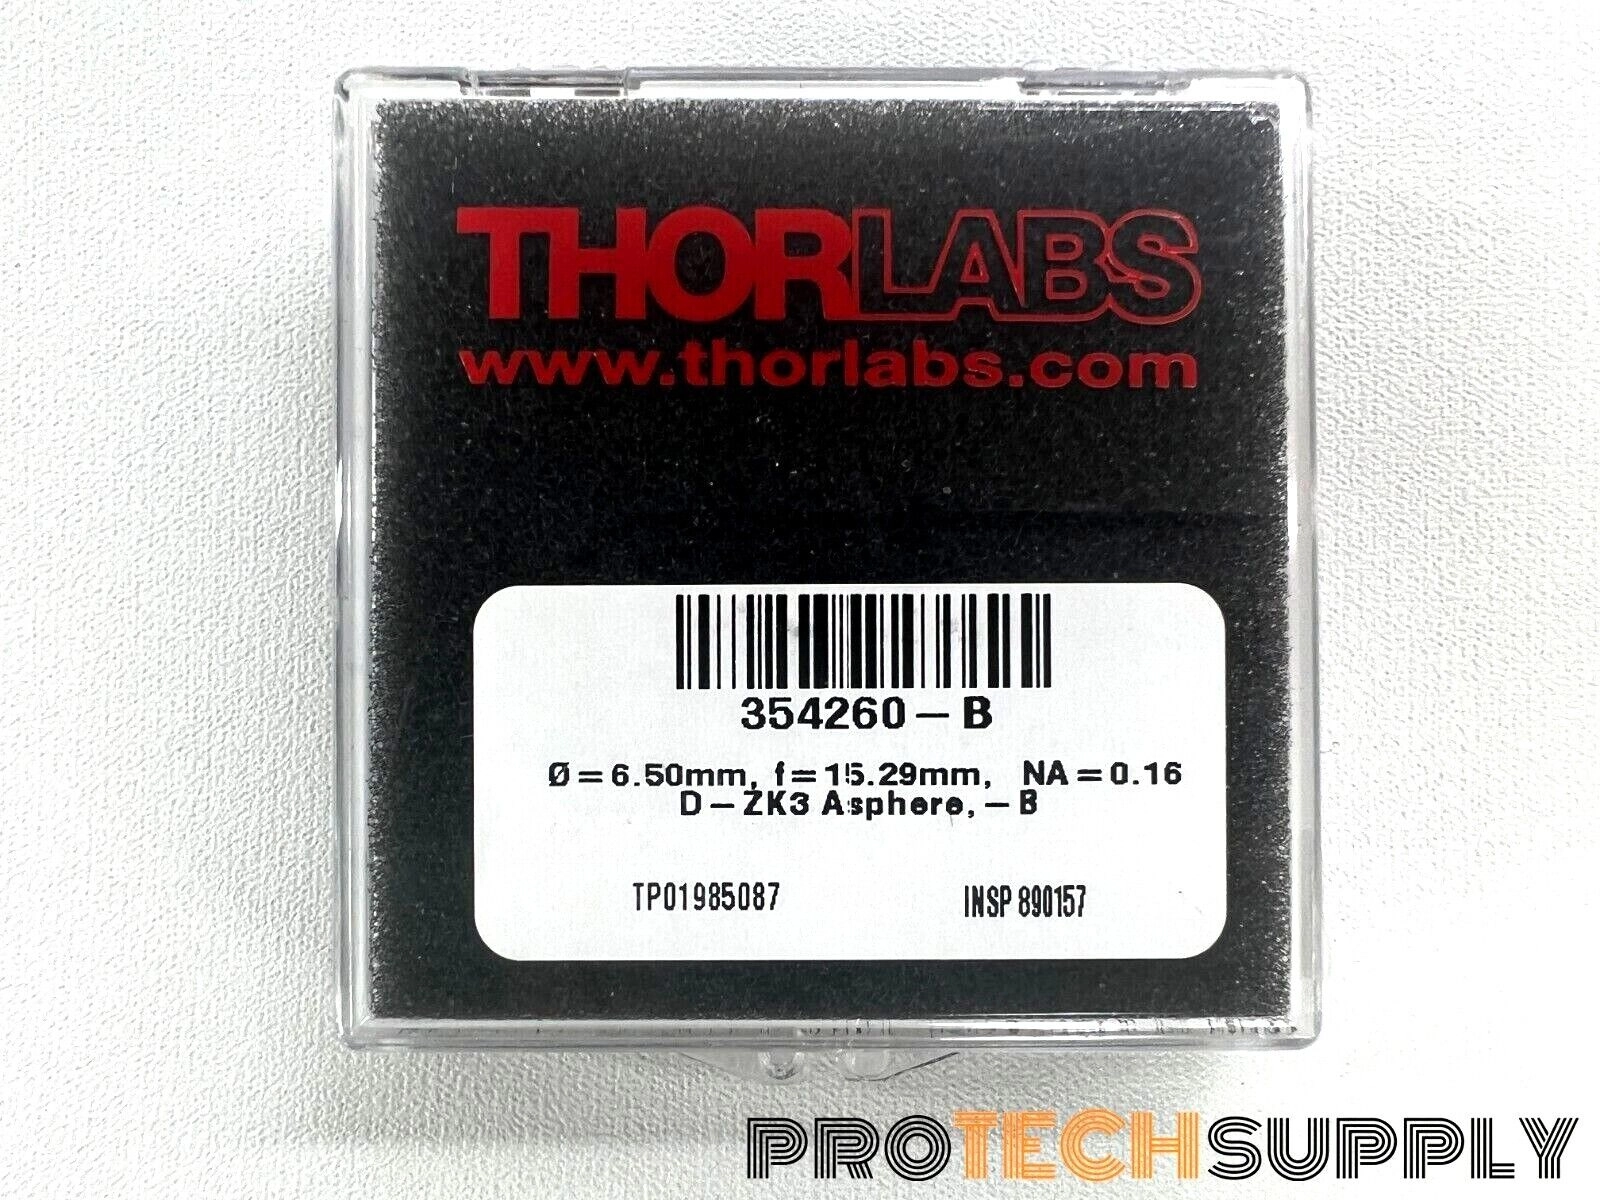 NEW (Sealed) Thorlabs 354260-B Unmounted Aspheric 